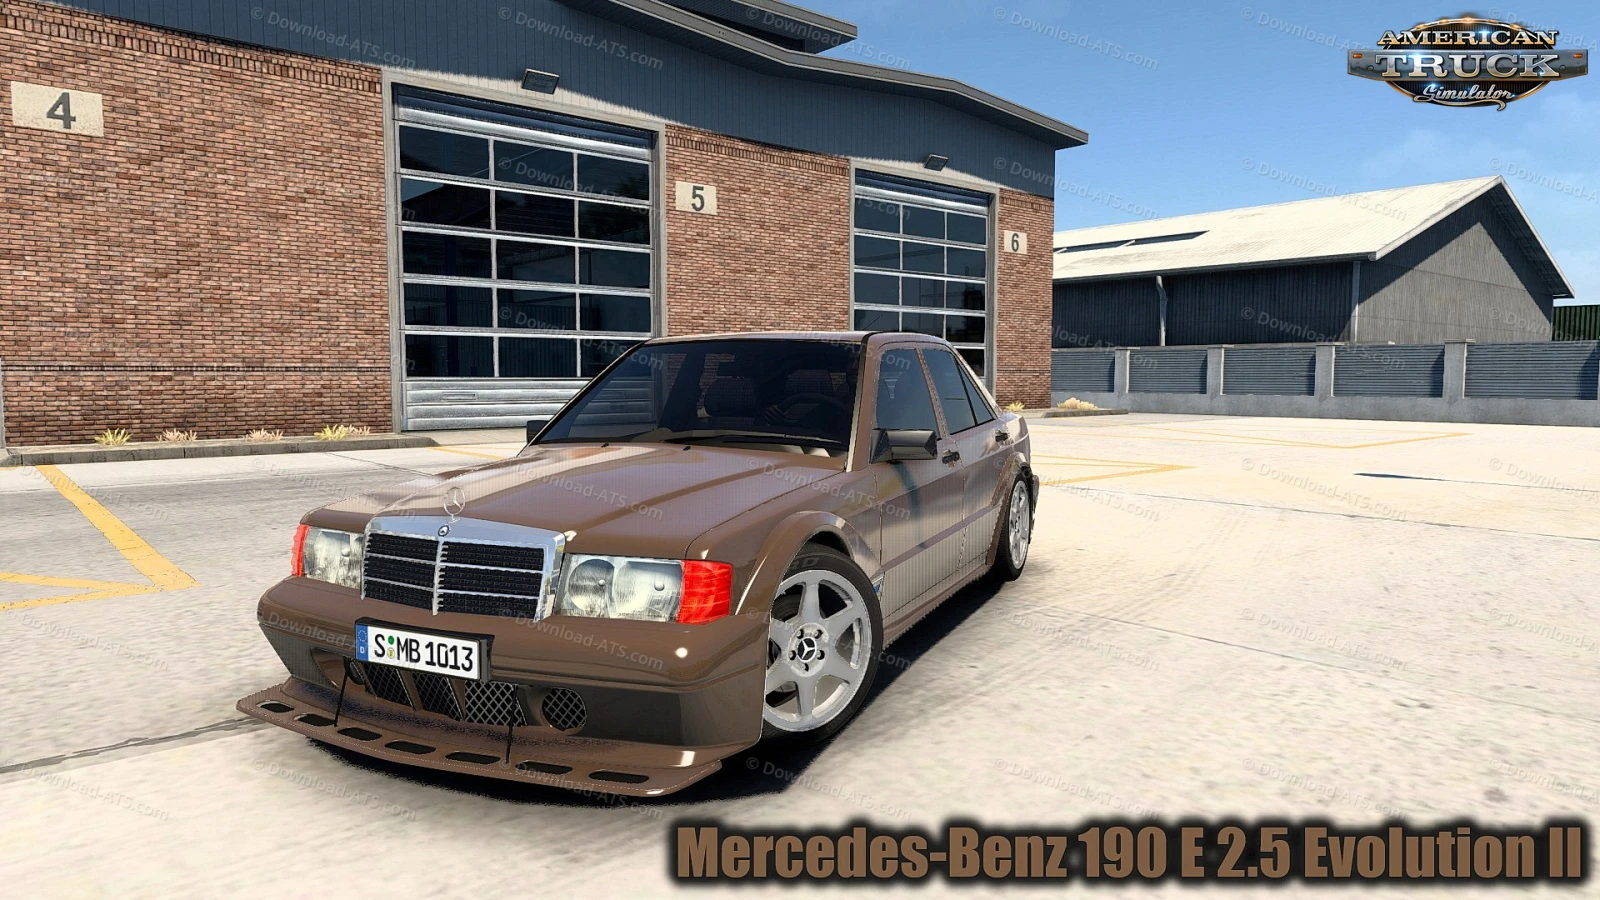 Mercedes-Benz 190 E 2.5 Evolution II v1.1 (1.47.x) for ATS